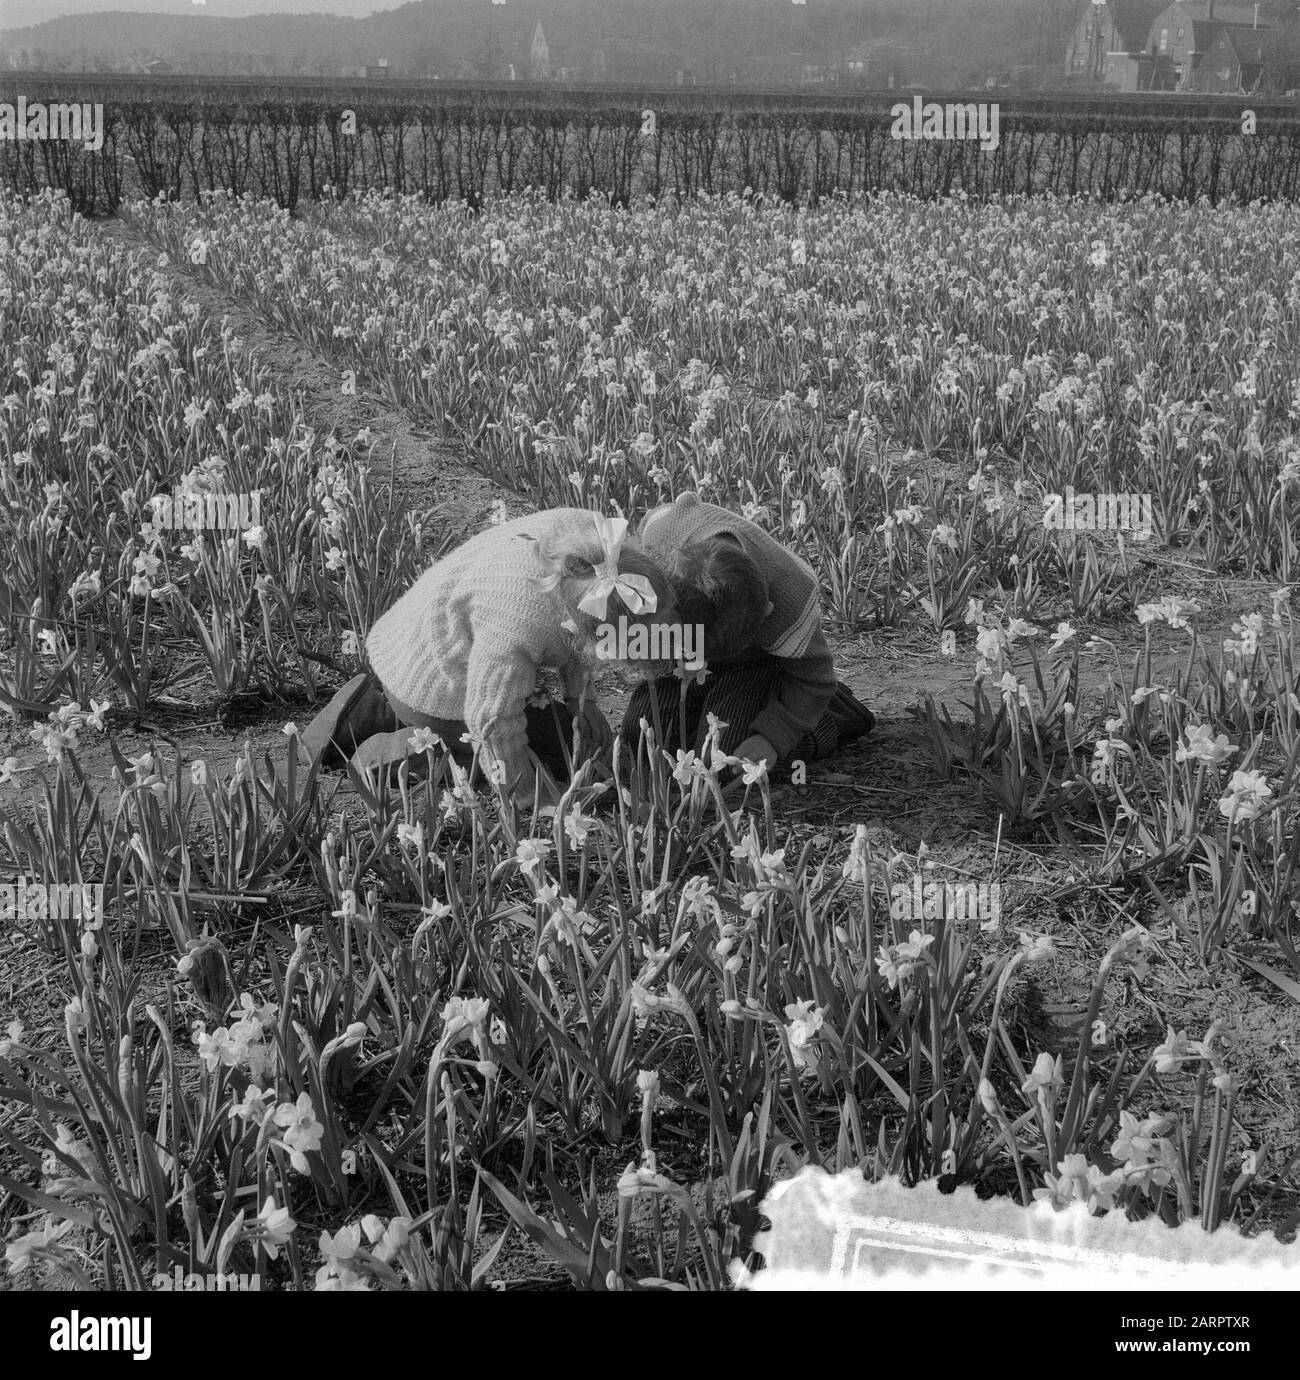 Children in daffodil fields near Noordwijk and Lisse Date: March 12, 1957 Location: Lisse, Noordwijk Keywords: flowers, children Stock Photo